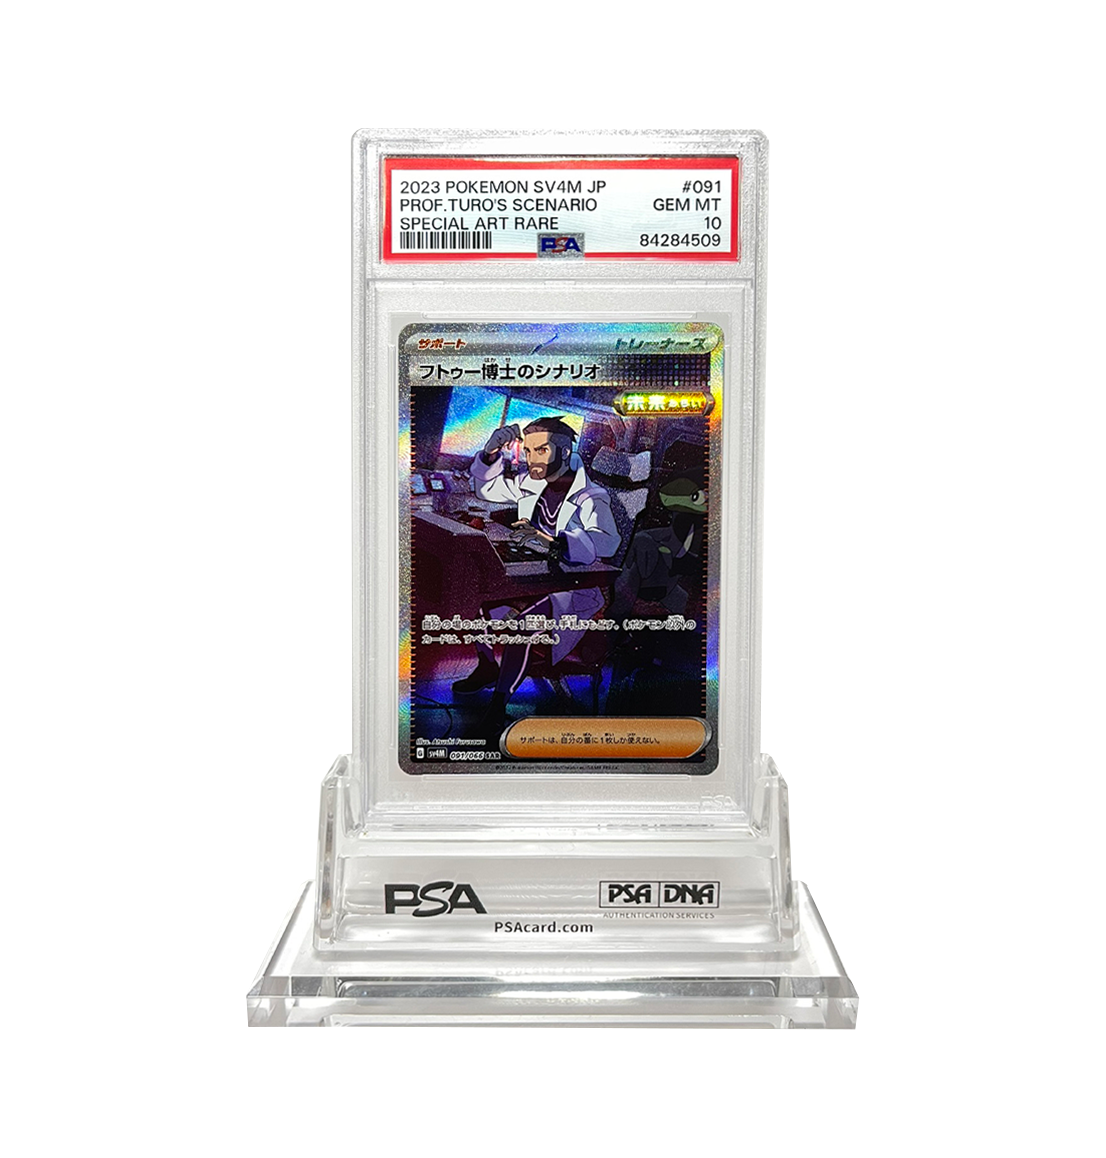 PSA 10 Professor Turo's Scenario 091 Future Flash SV4M Japanese Pokemon card